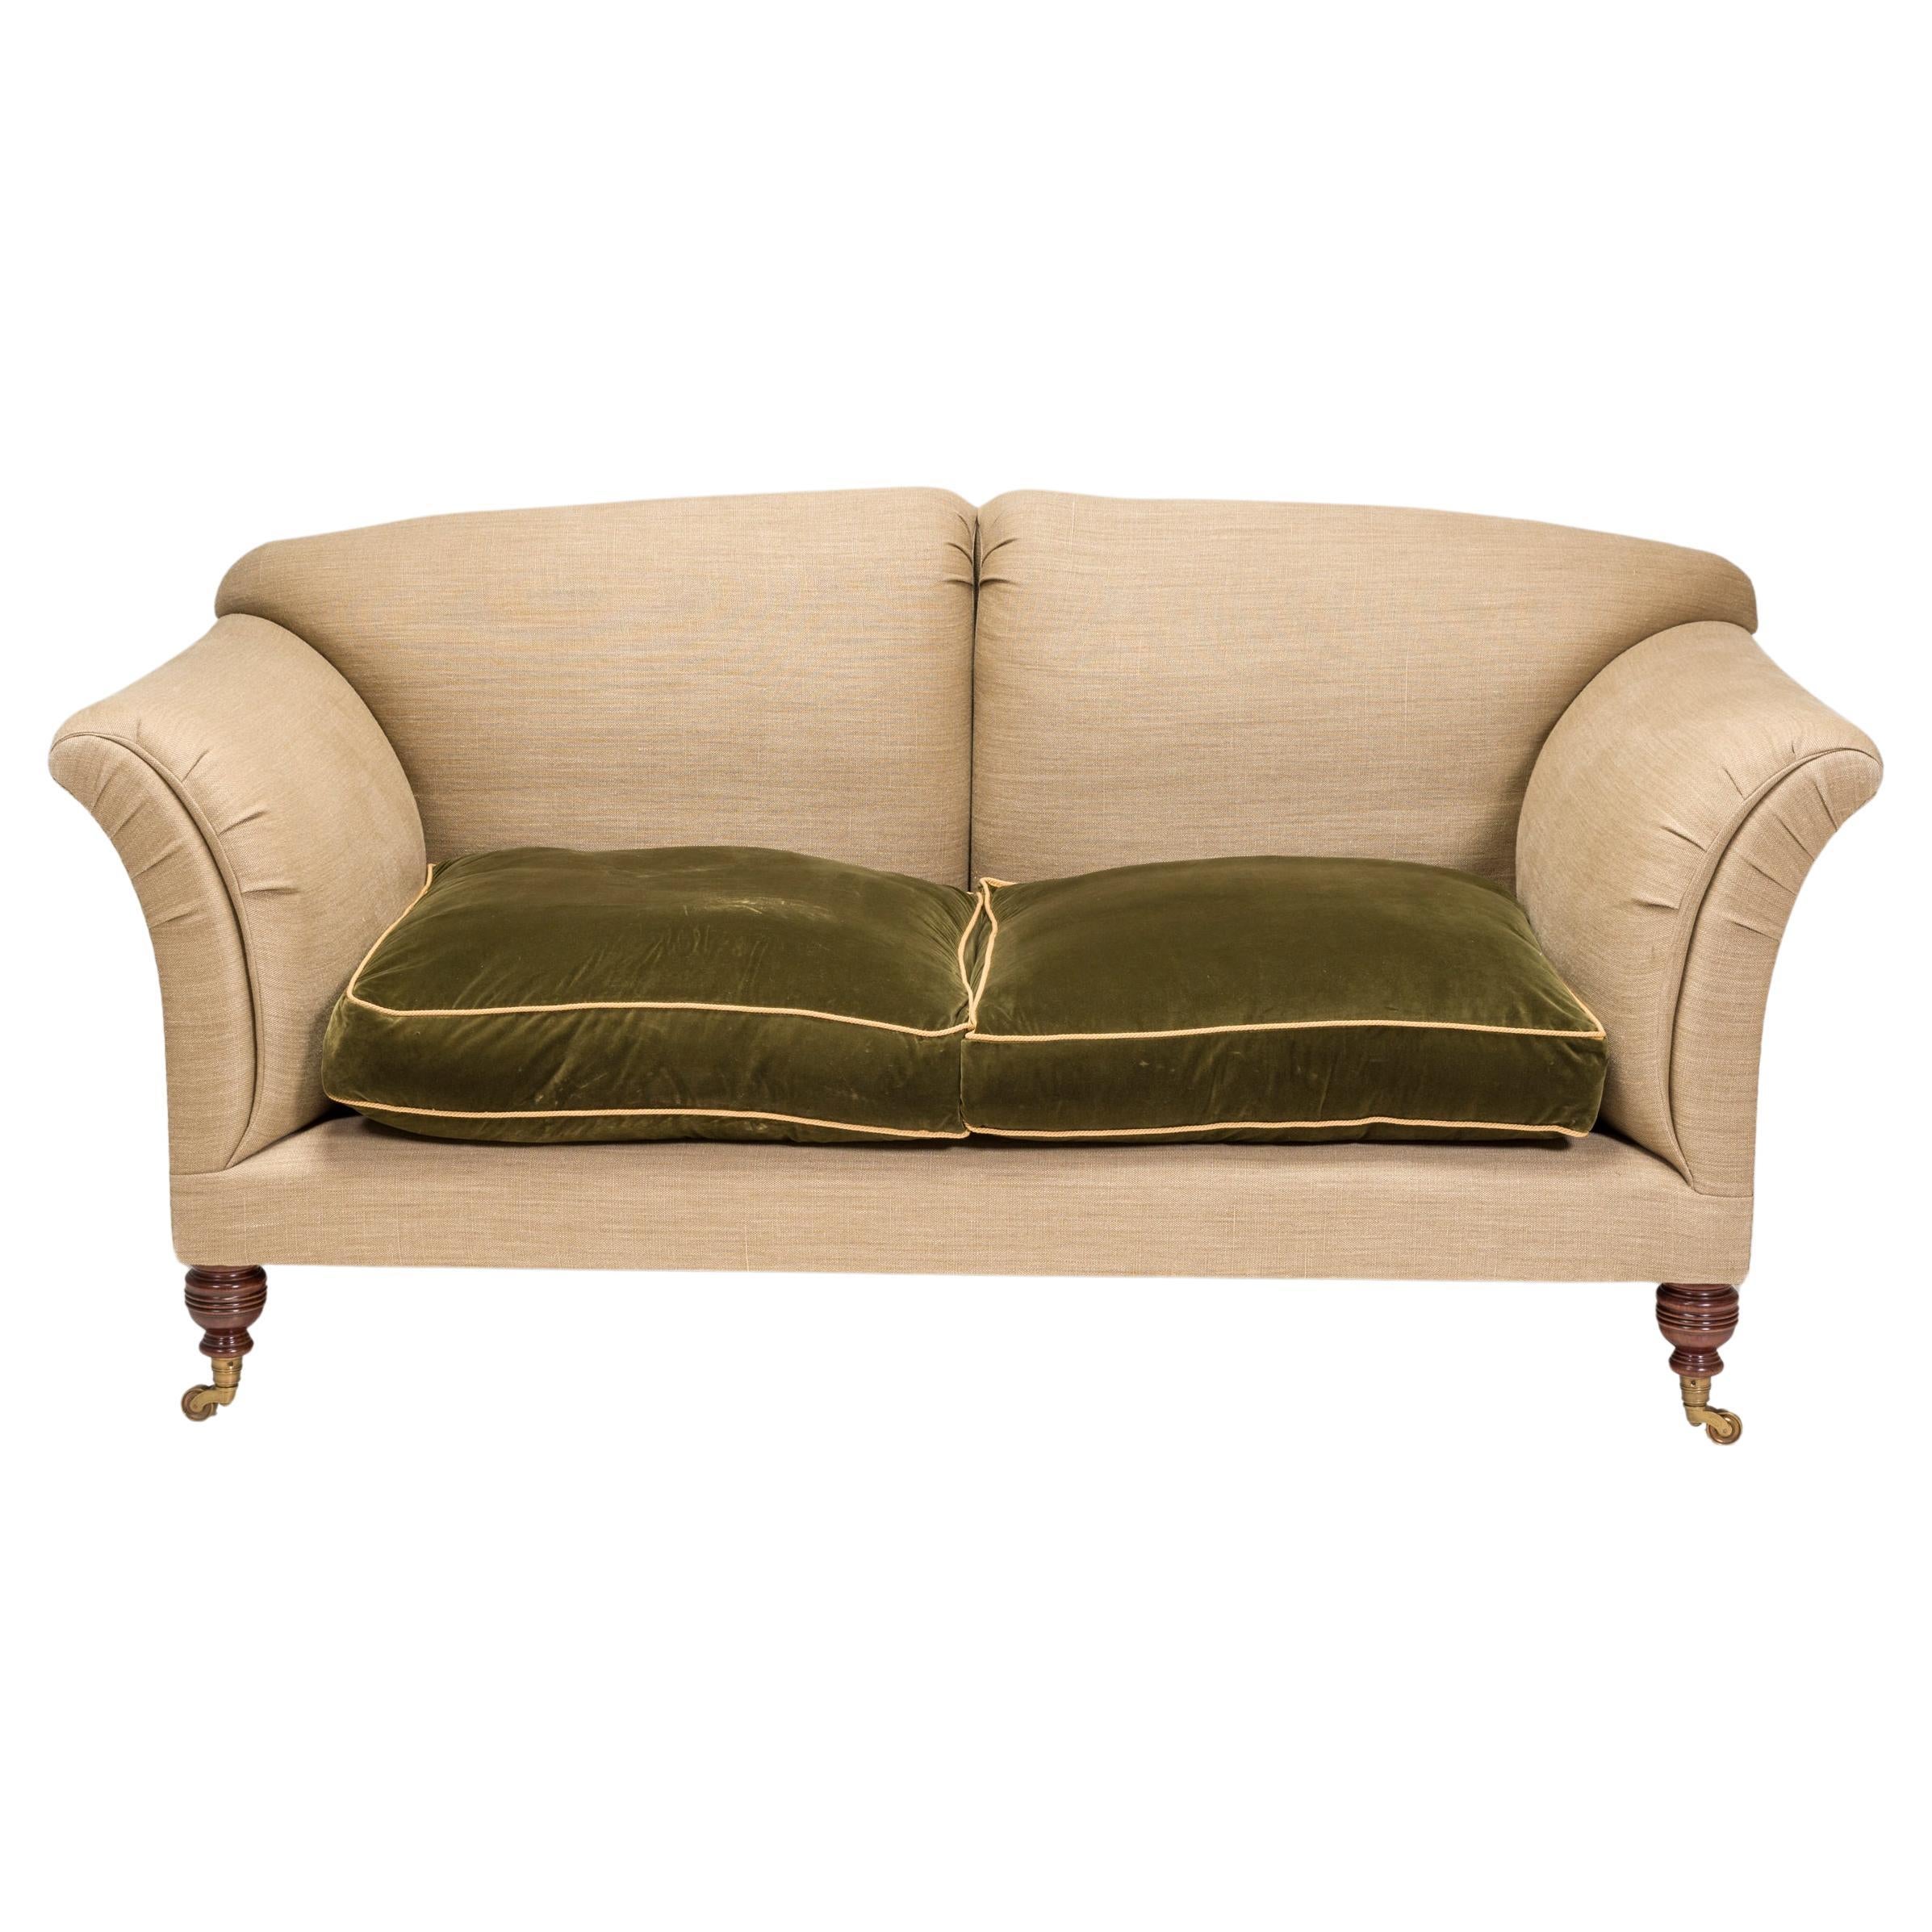  British Victorian Max Rollitt Dean Green Velvet and Beige Fabric Sofa For Sale